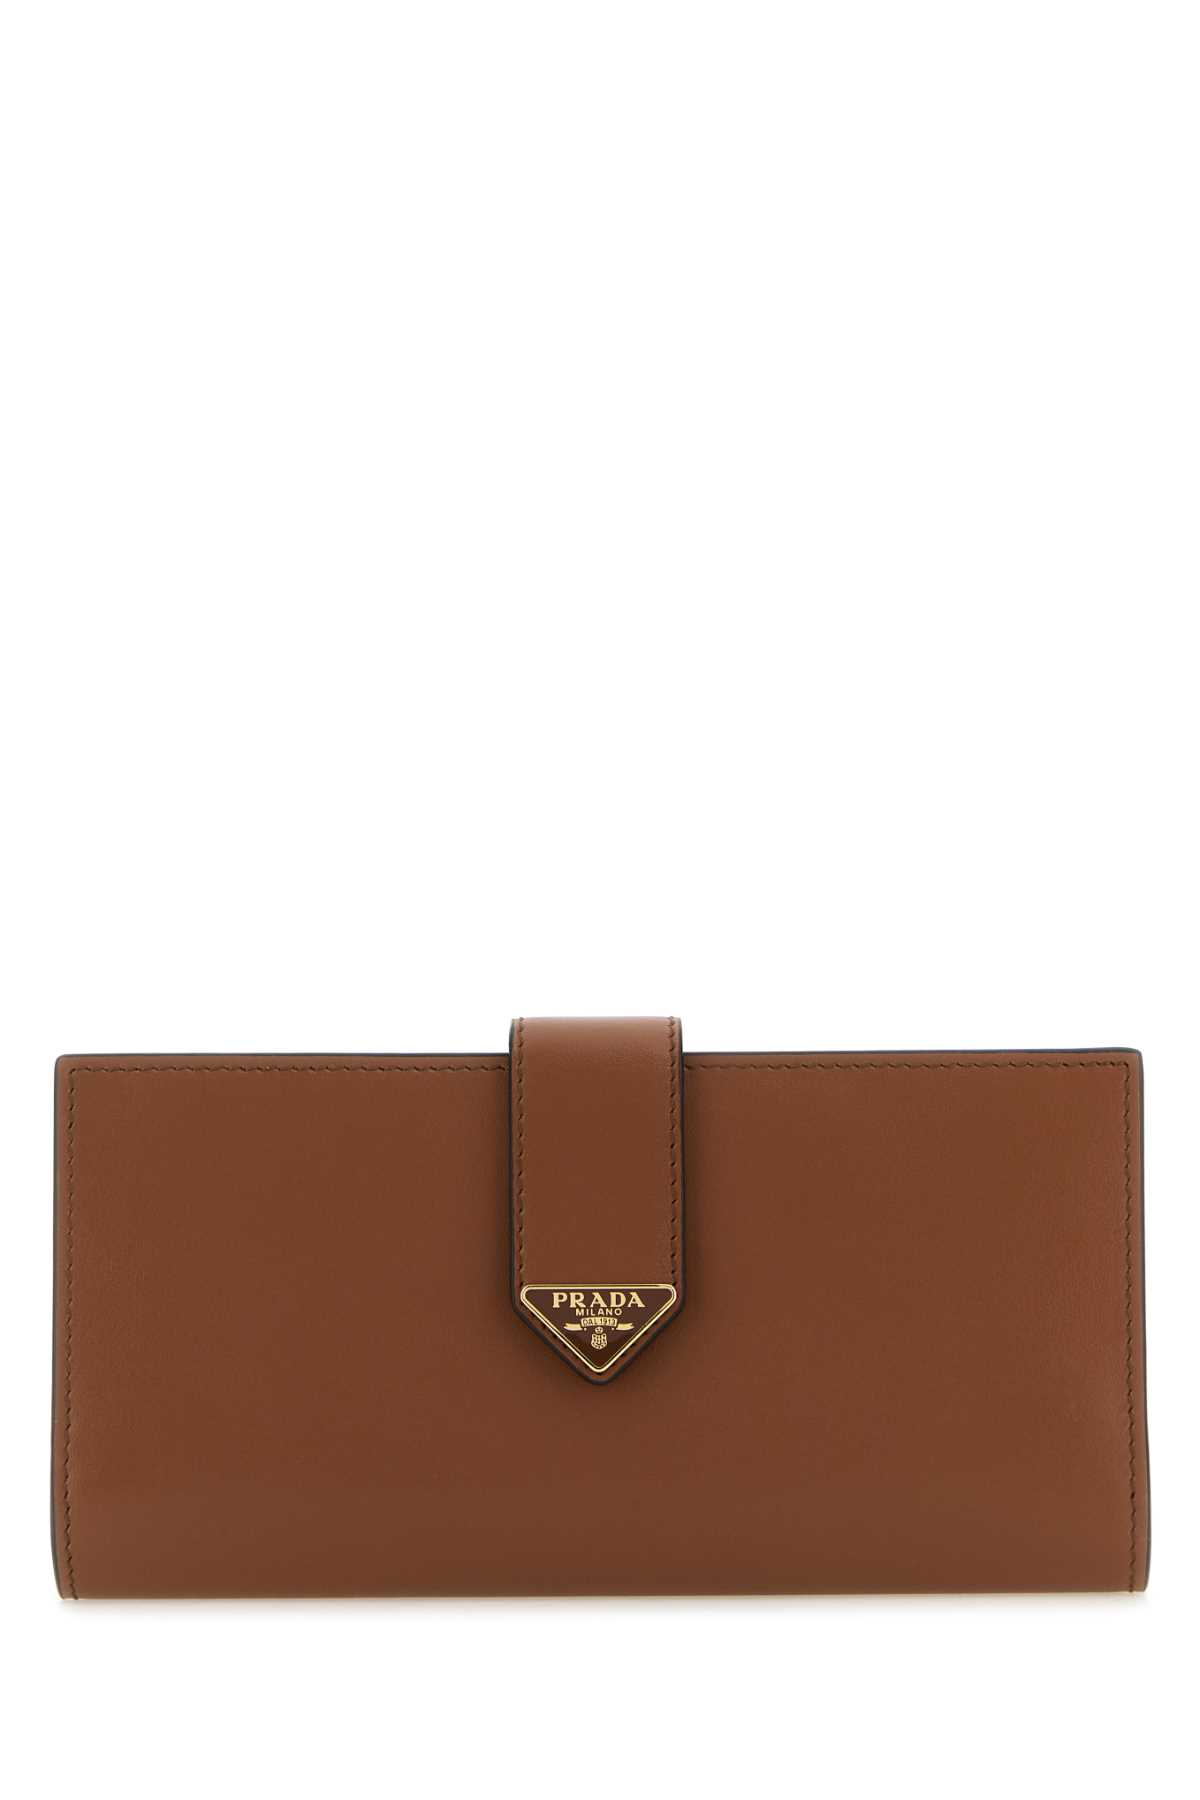 Prada Brown Leather Large Wallet